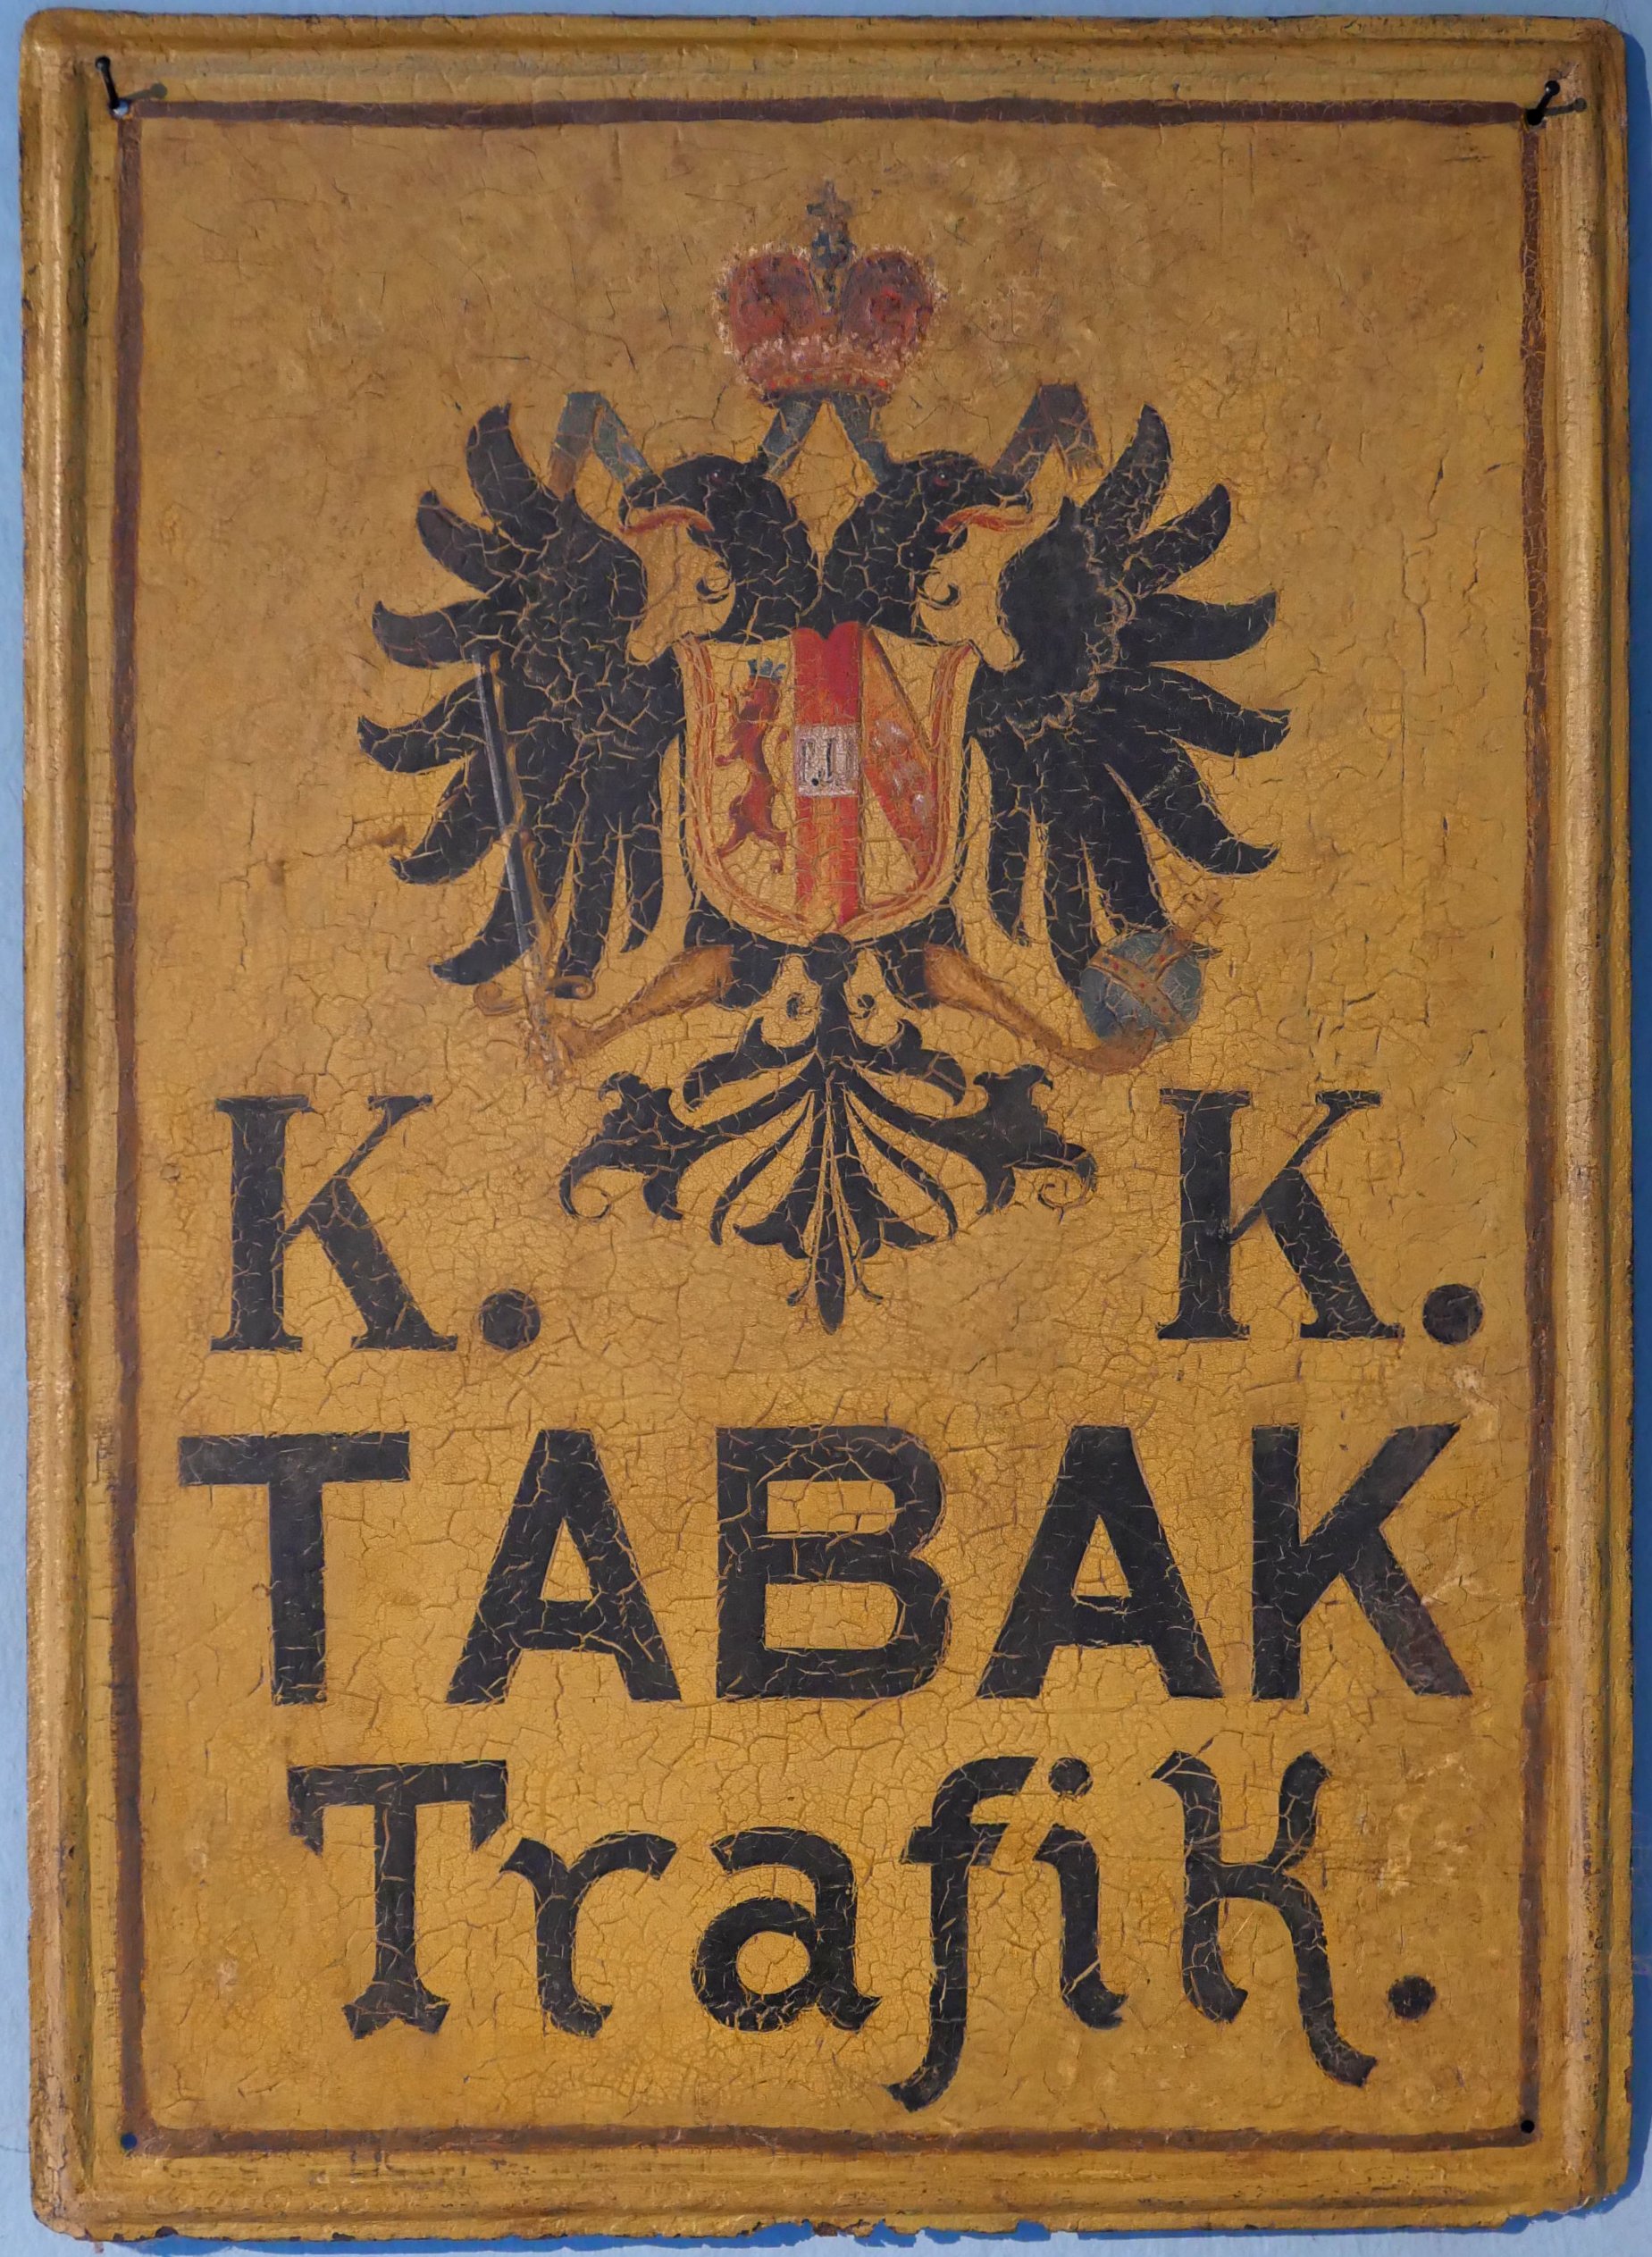 K.K.Tabak-Trafik